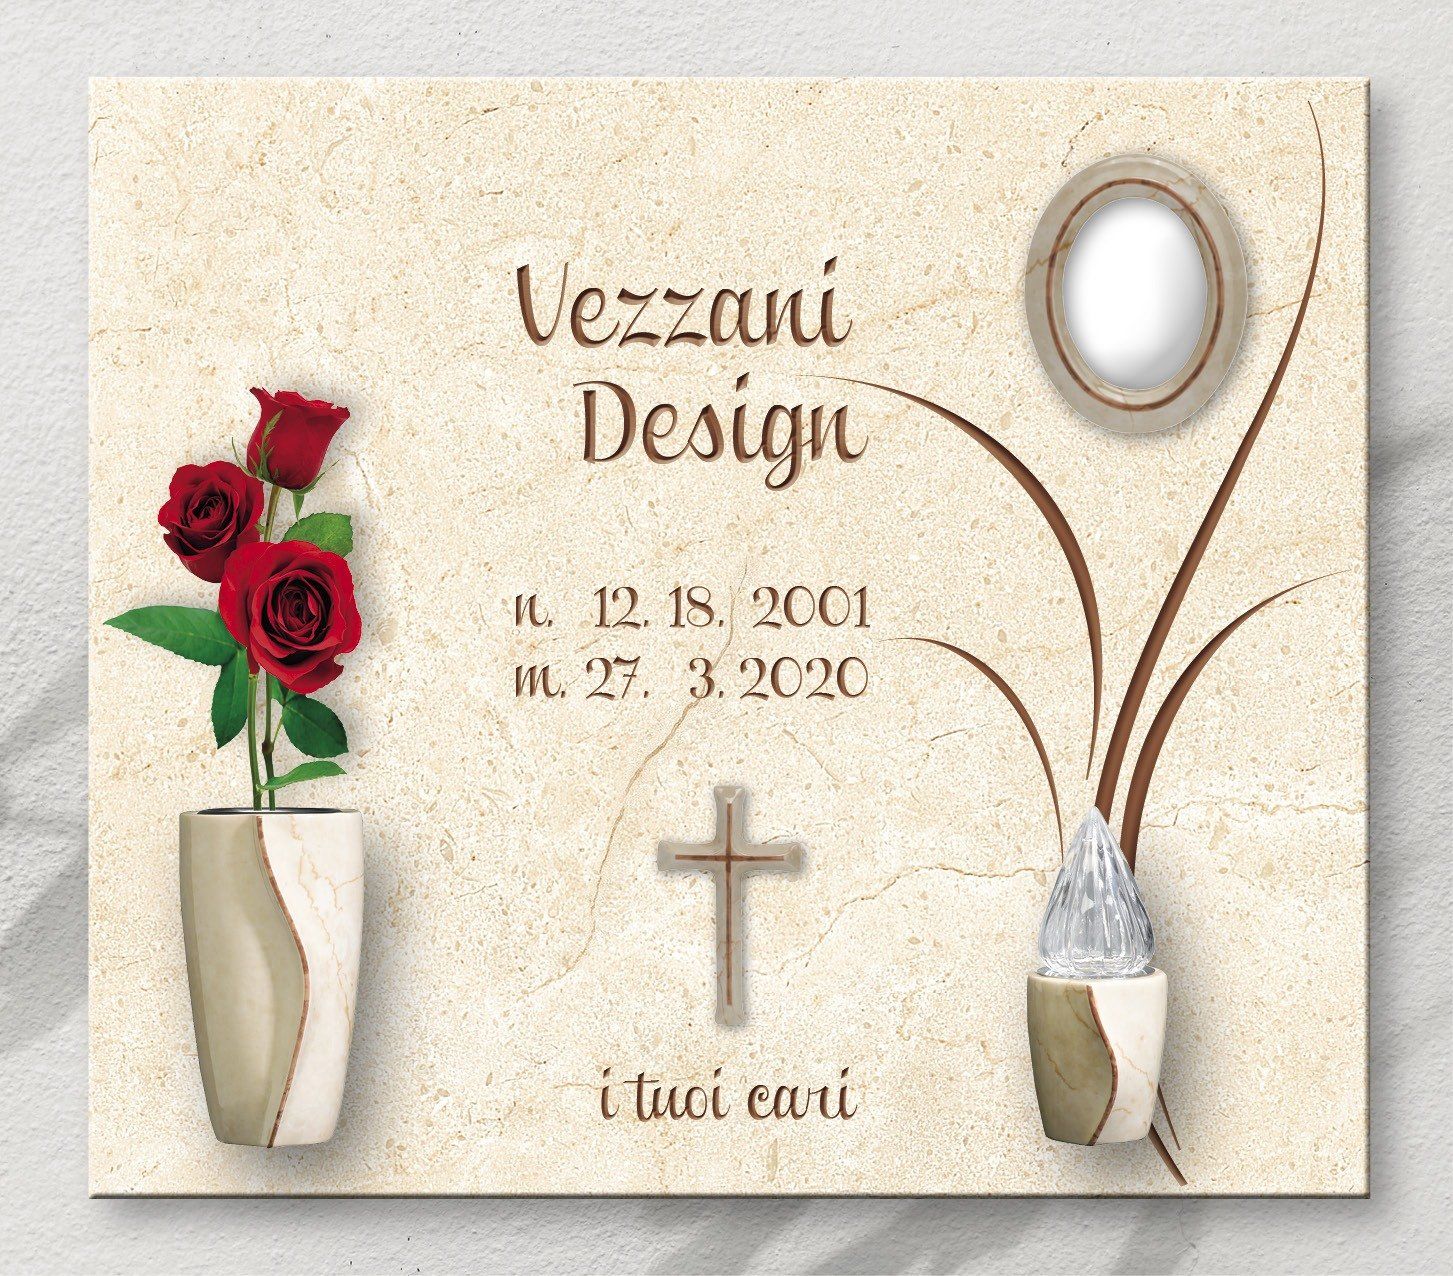 Niche with personalized engraving vezzani design 37